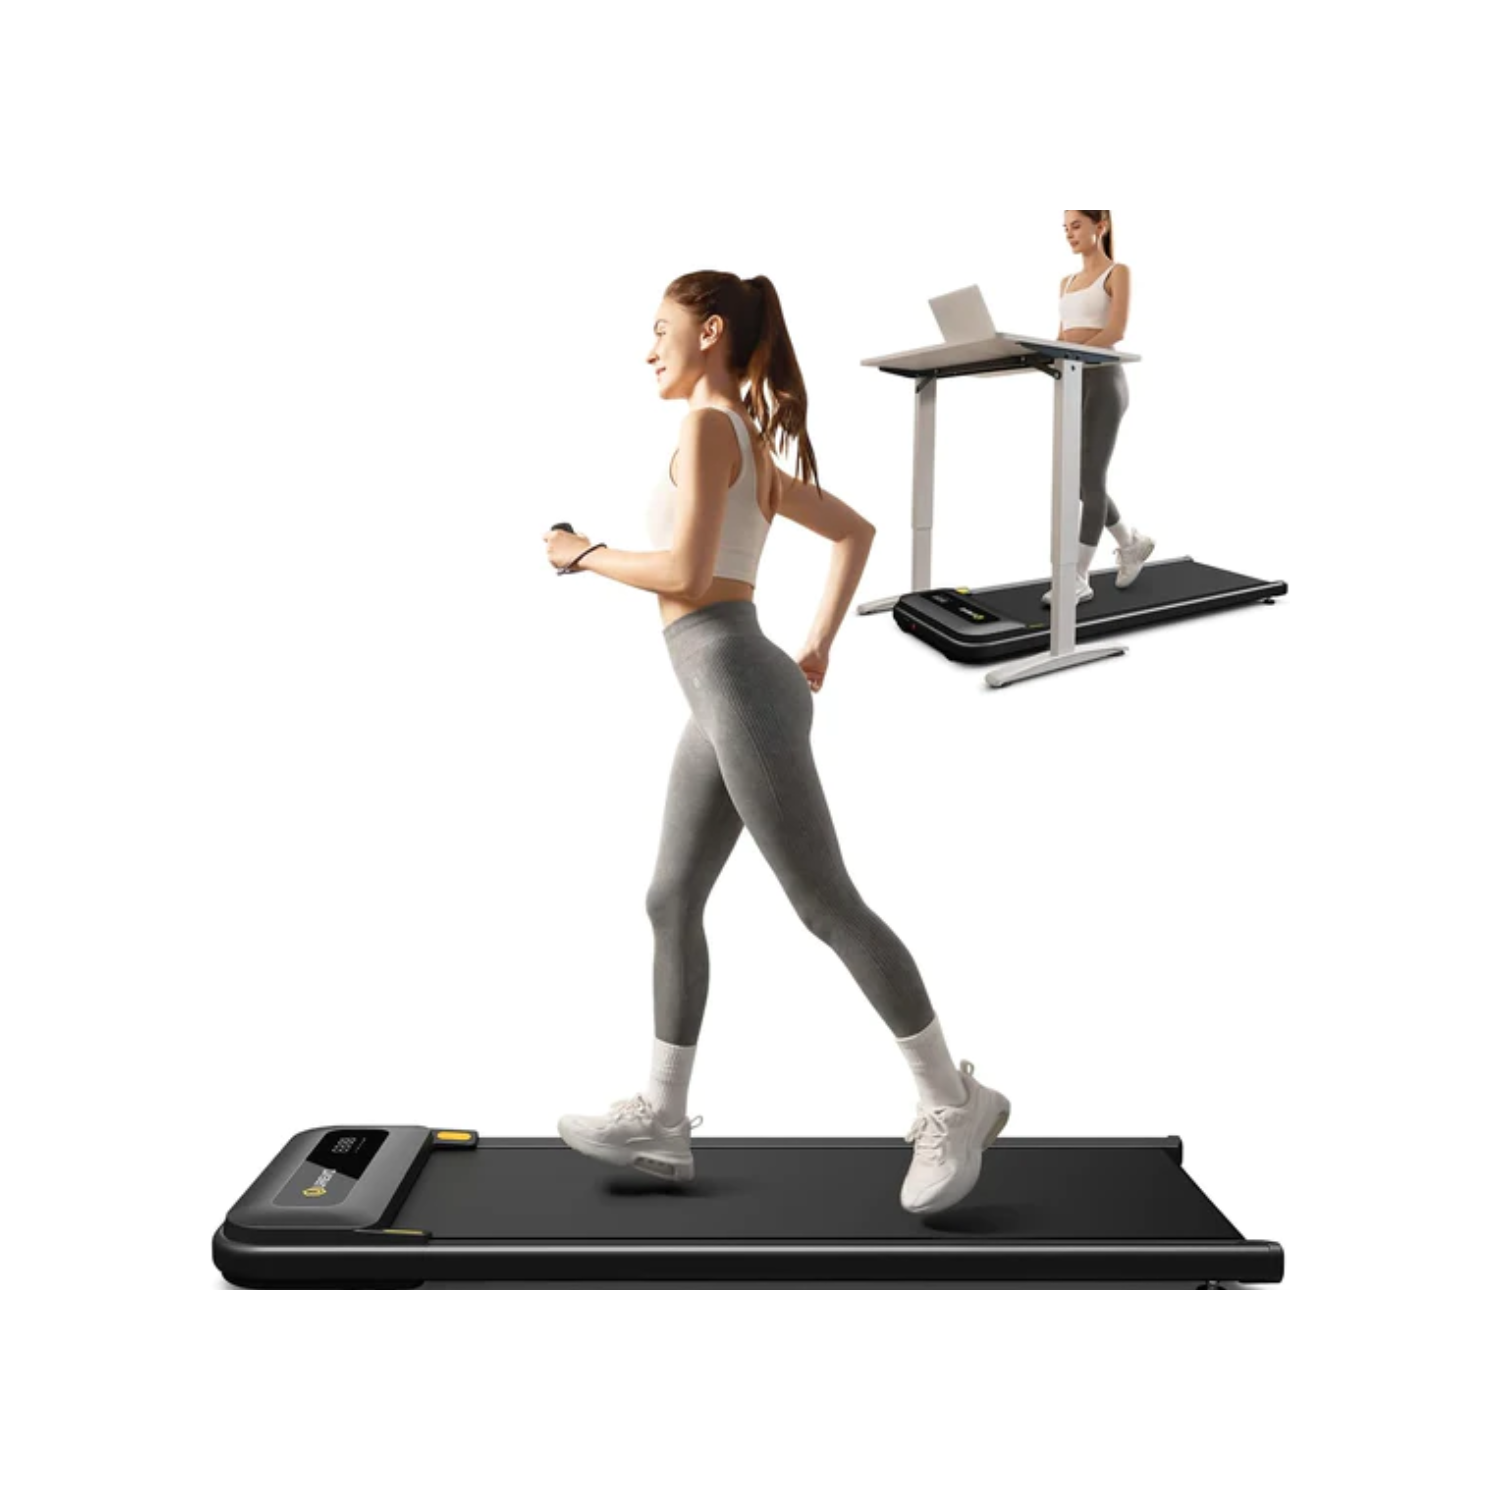 Urevo U1 Under Desk Walking Treadmill | 2-in-1 Slim & Portable Treadmill |Office and Home Treadmills| 2.25HP Walking pad | Bluetooth remote and LED display